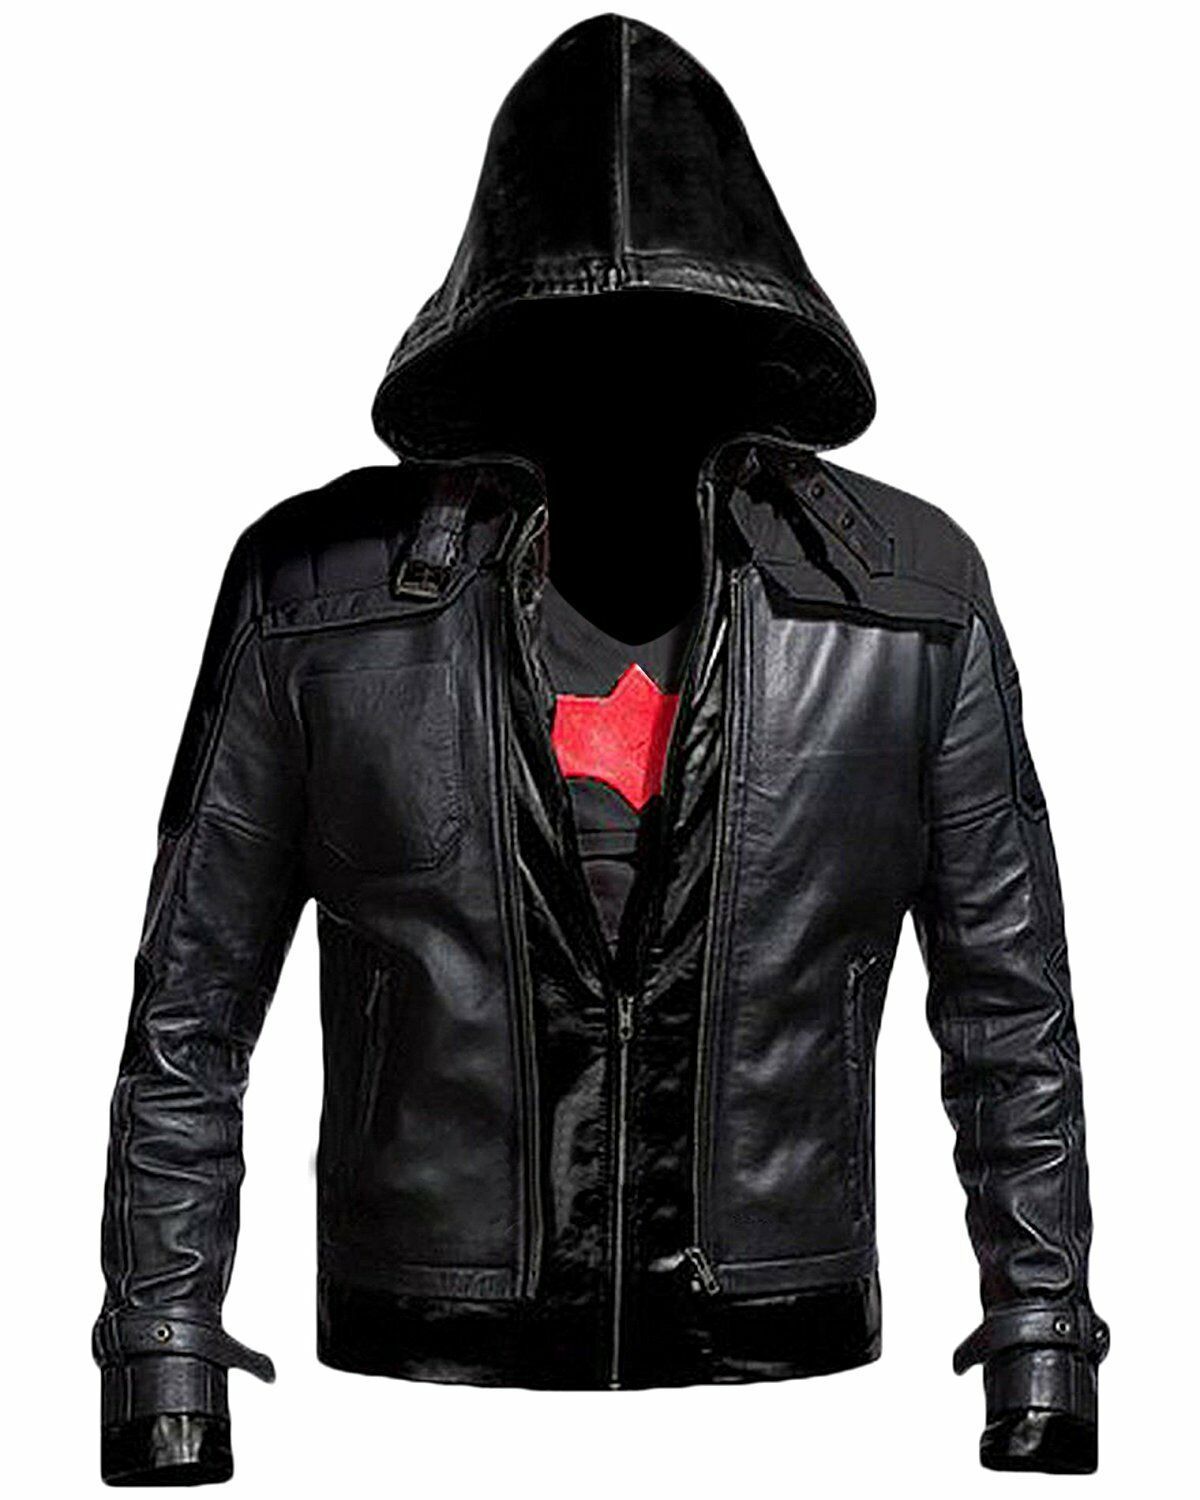 New Batman Arkham Knight Game Red Hood Leather Jacket & Vest Costume -BNWT